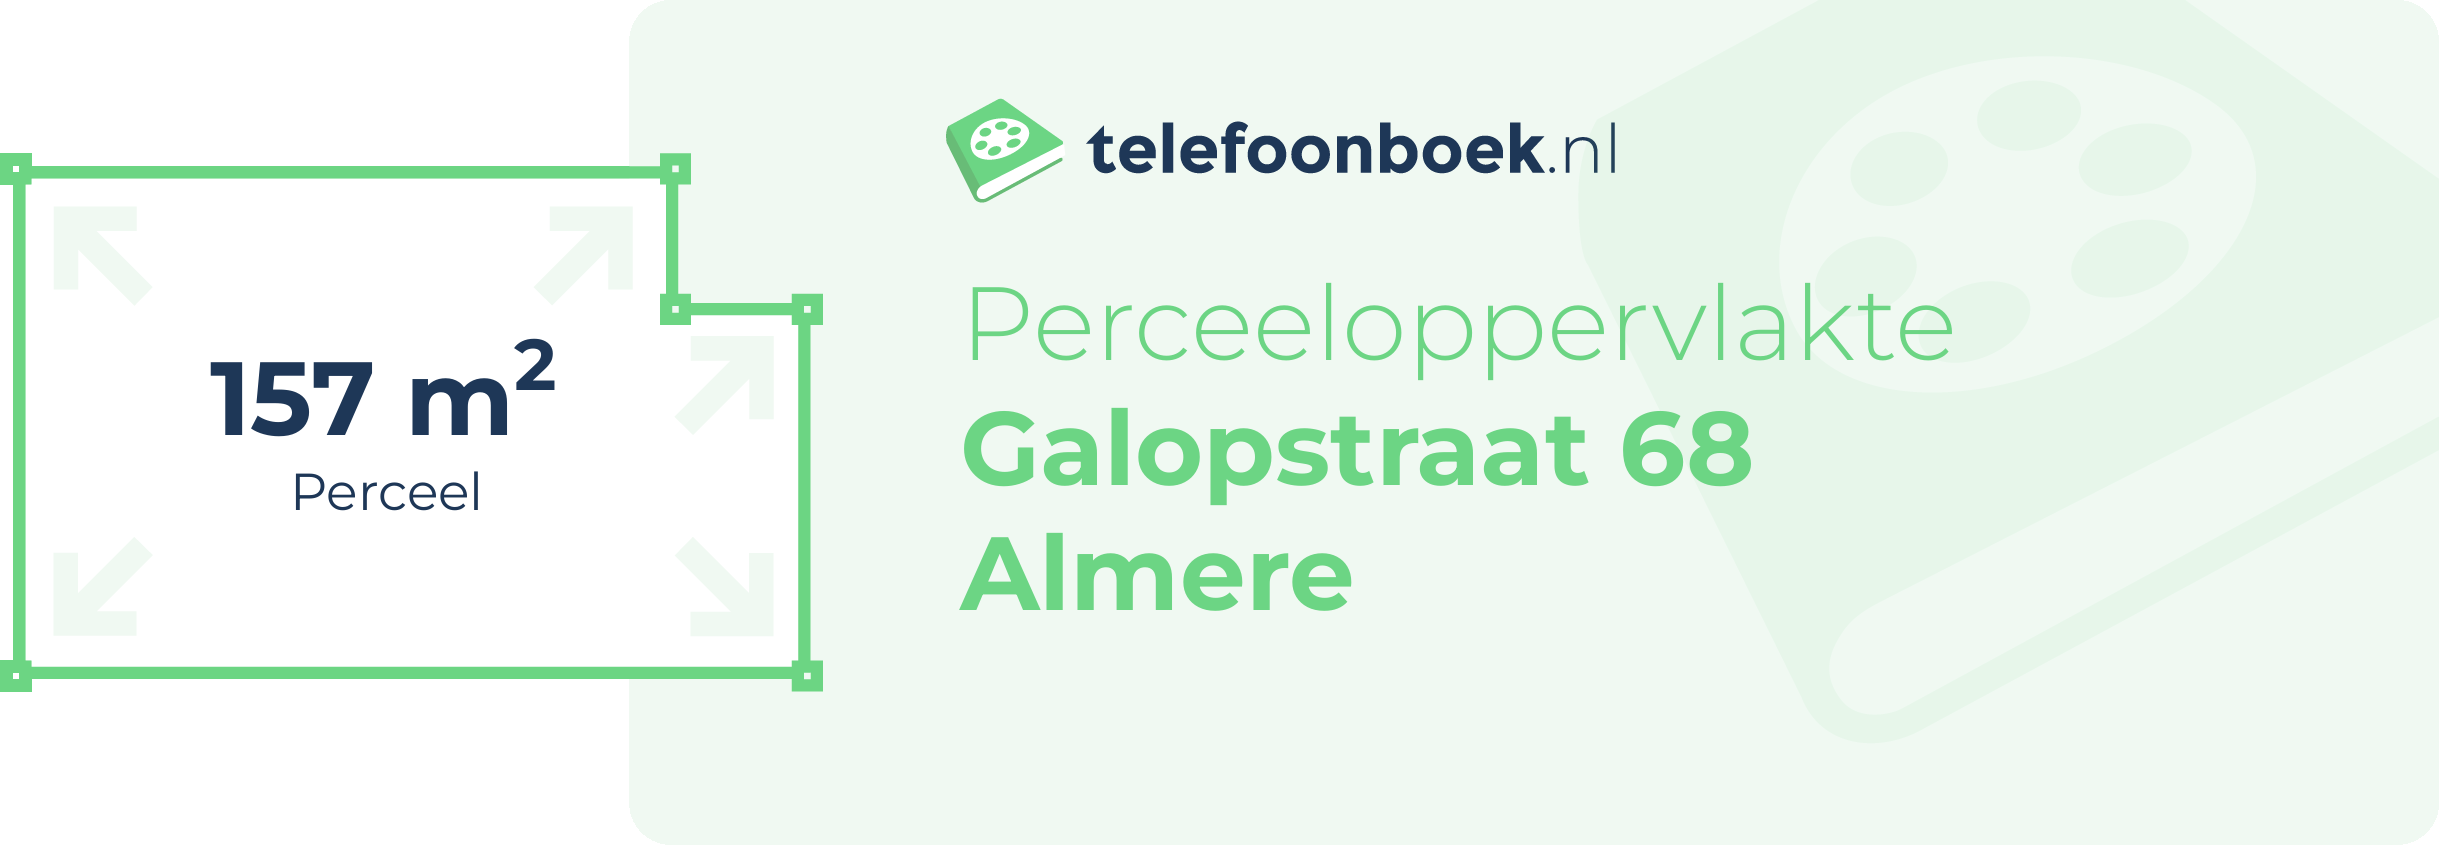 Perceeloppervlakte Galopstraat 68 Almere